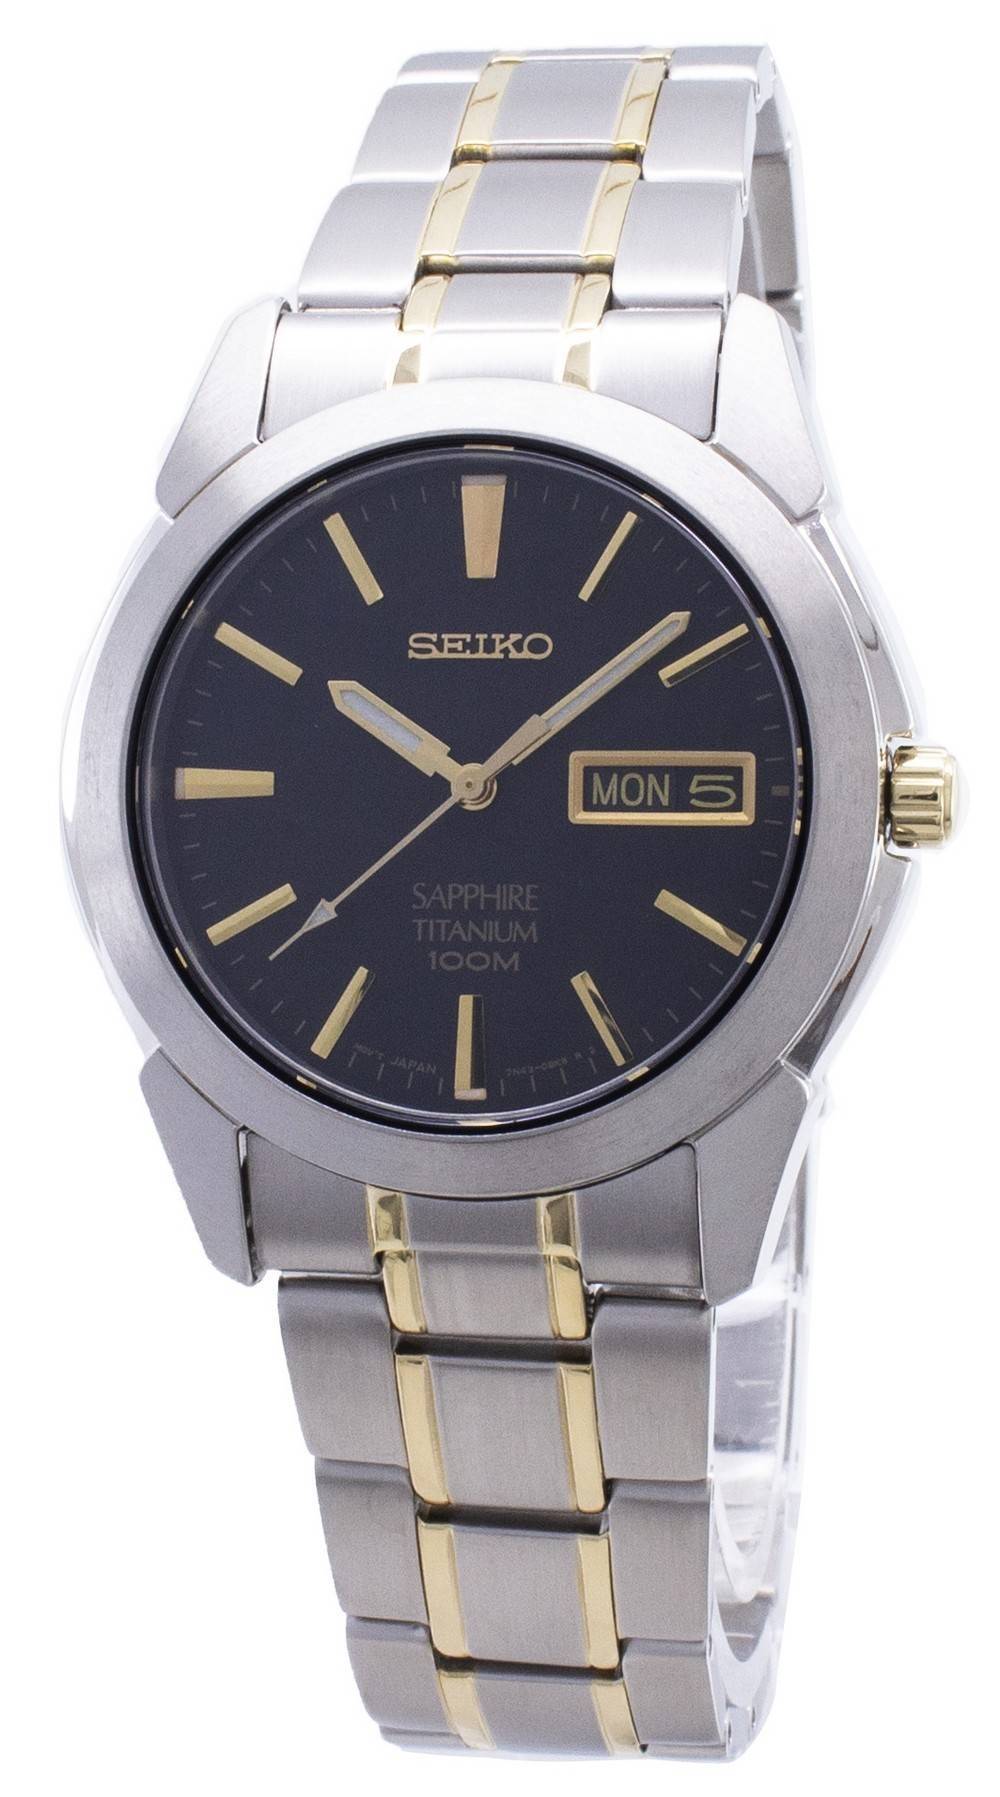 Đồng hồ đeo tay nam Seiko Sapphire Titanium SGG735 SGG735P1 SGG735P vi